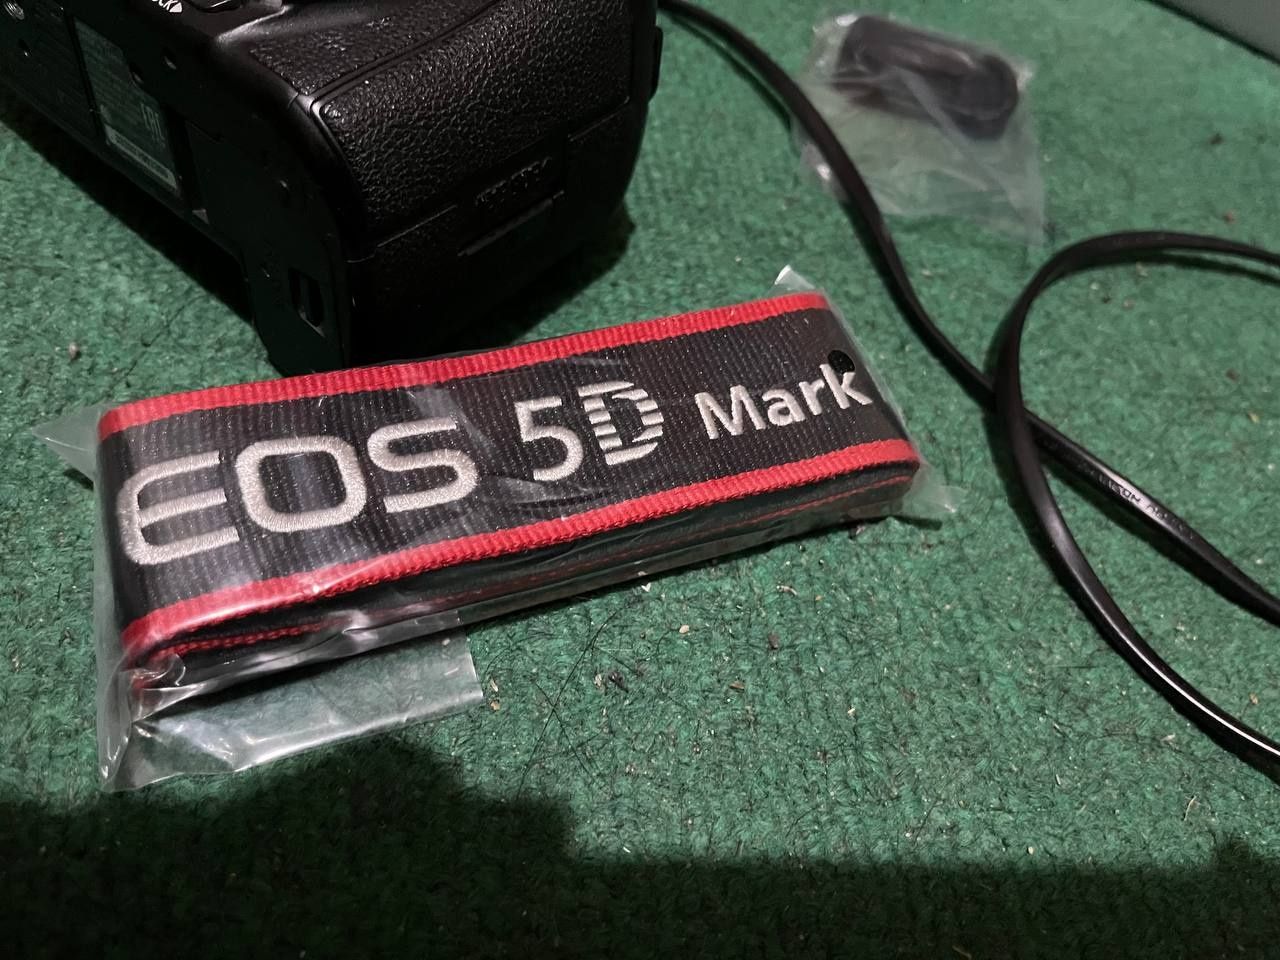 Canon Eos mark 4 +24-70 II